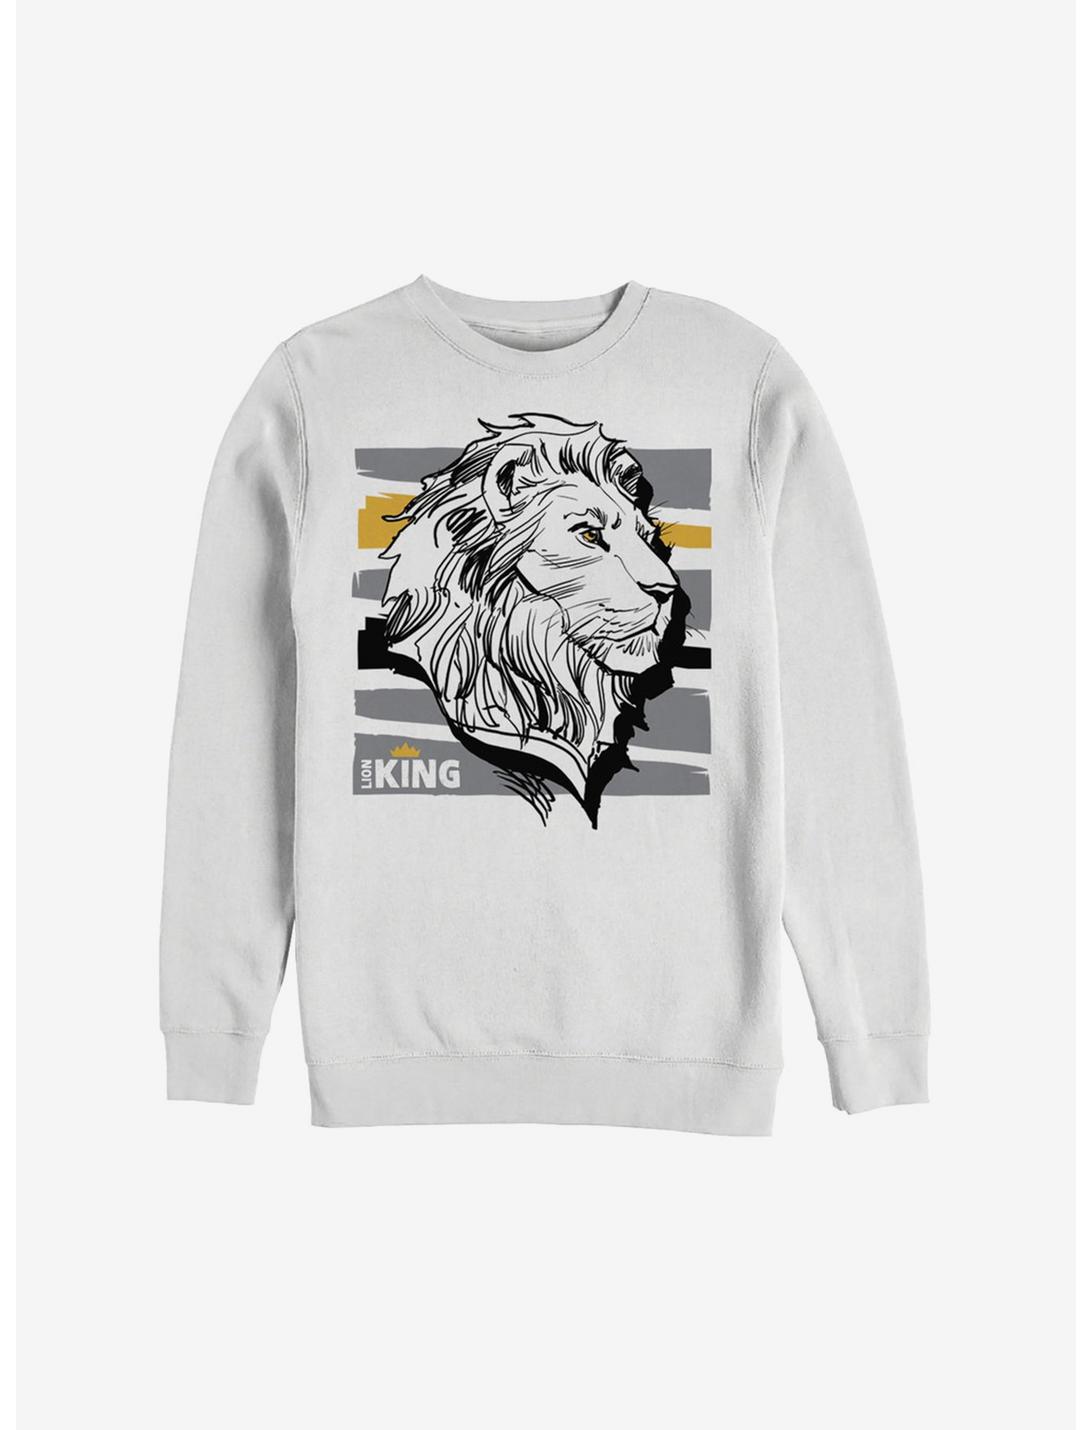 Plus Size Disney The Lion King 2019 King Sweatshirt, WHITE, hi-res